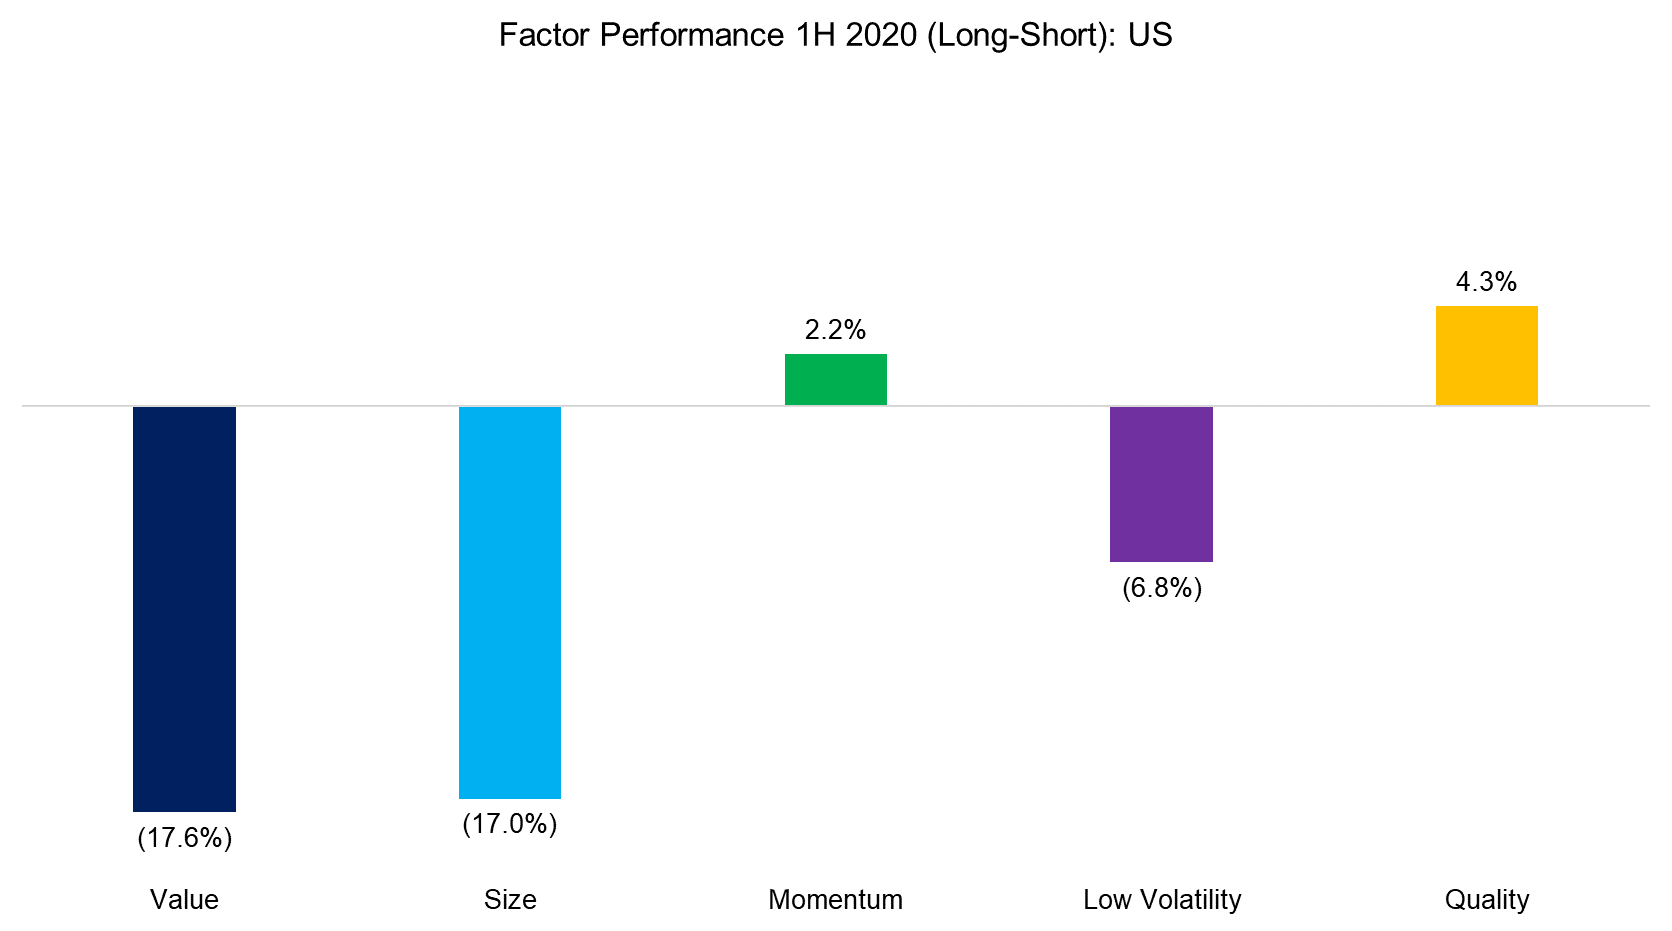 Factor Performance 1H 2020 (Long-Short) US